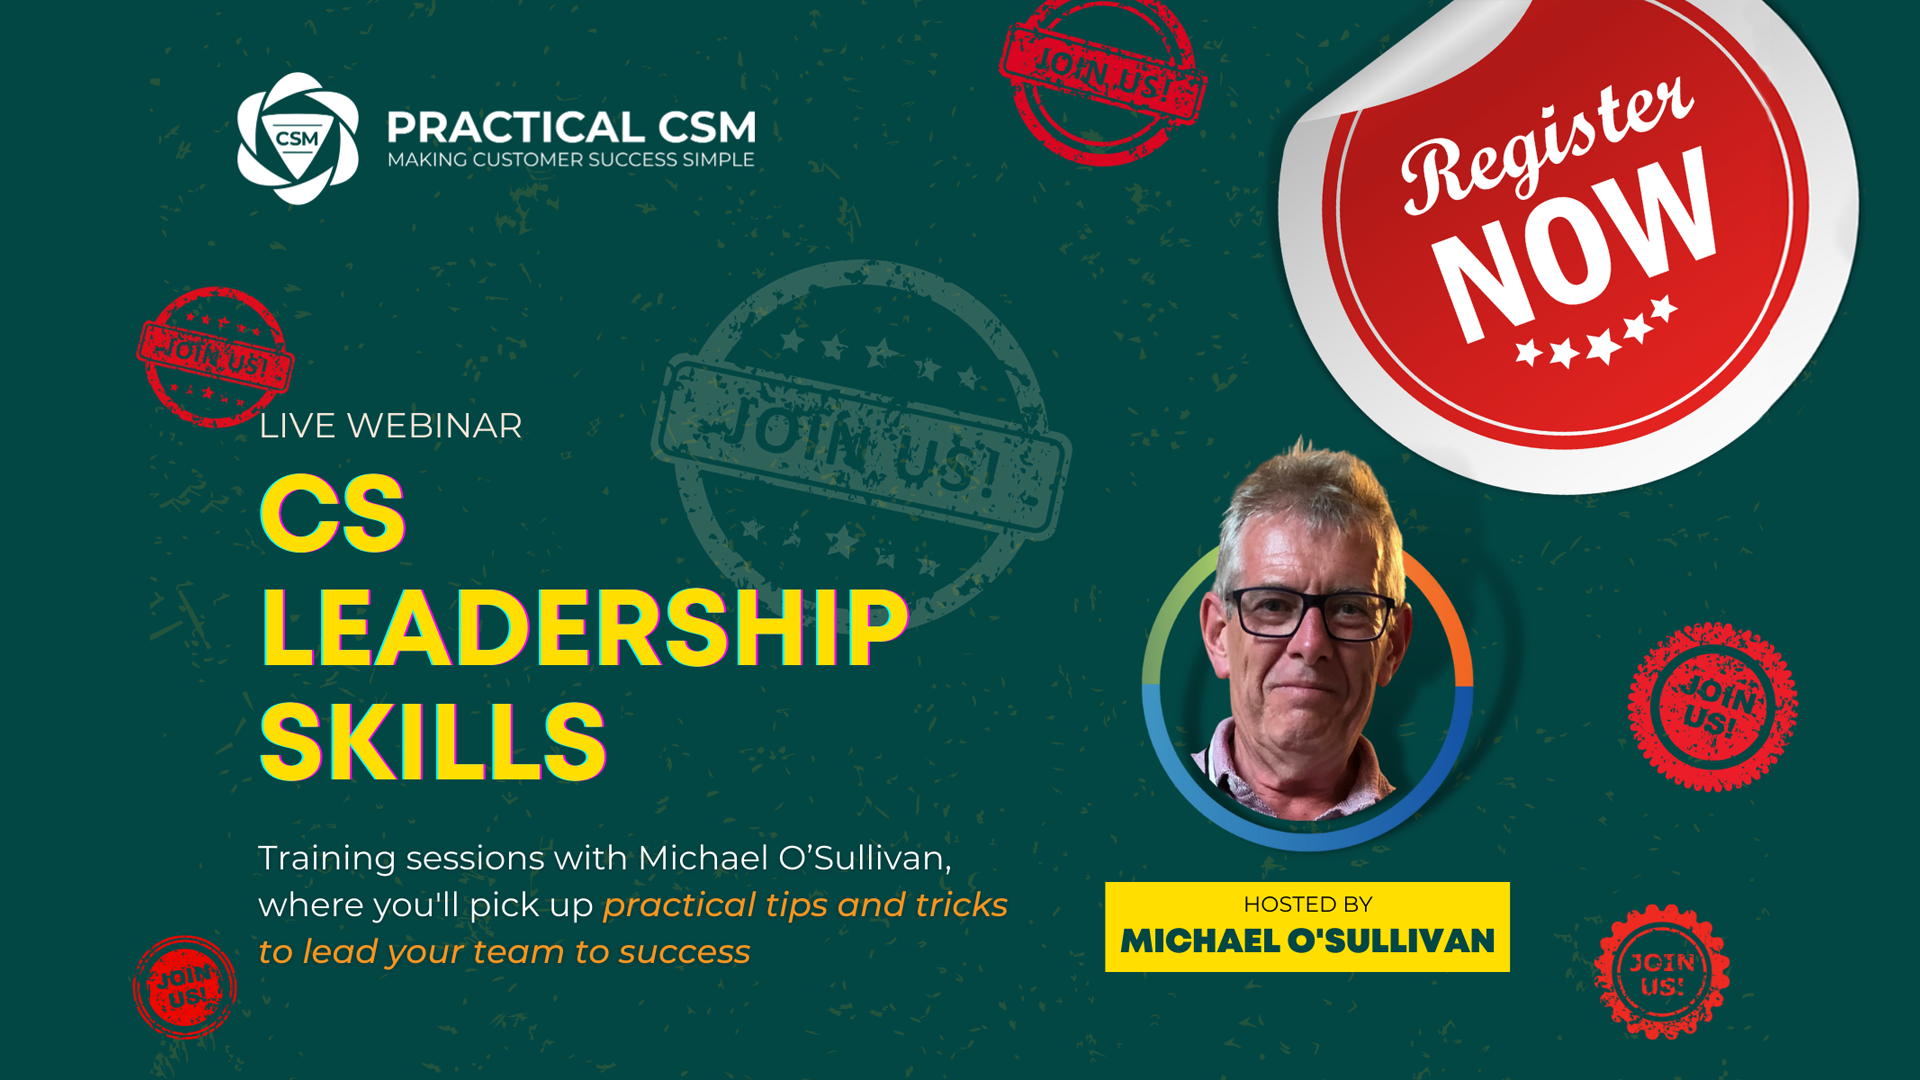 Practical CSM live Webinar CS Leadership Skills with Michael O'Sullivan